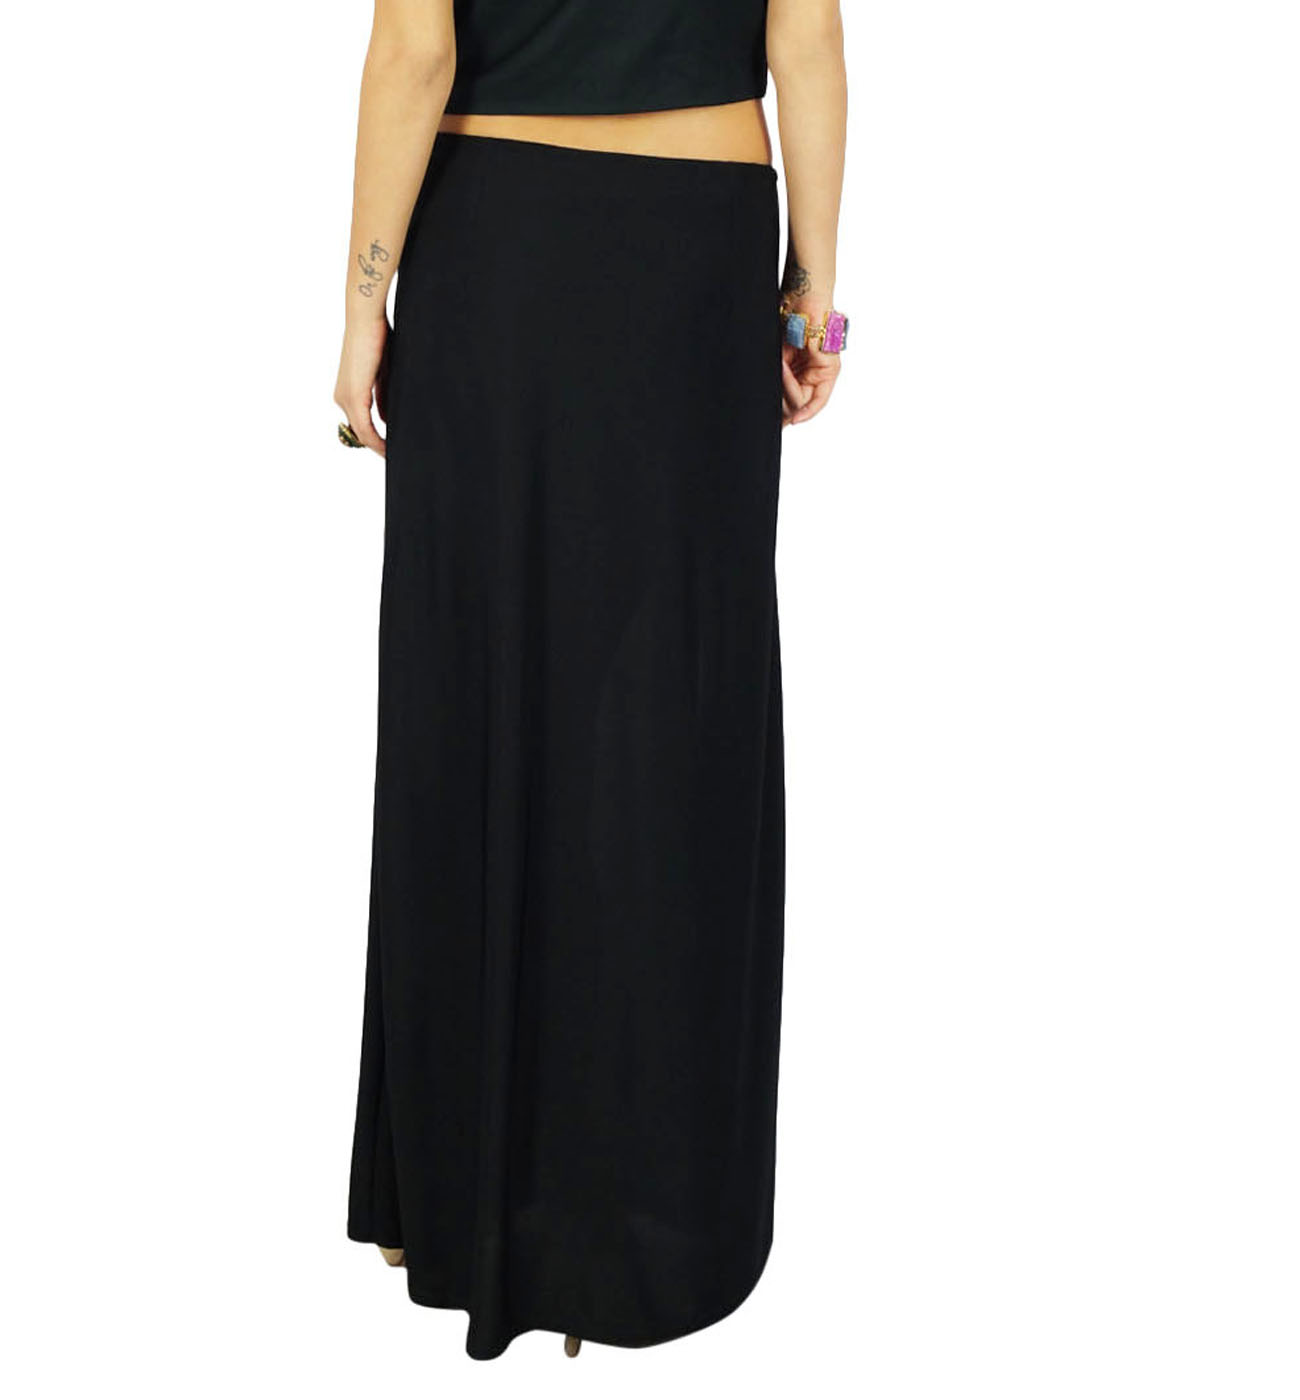 Bimba Women Black Pencil Long Skirt Side Slit Rayon Skirt-xlv | eBay